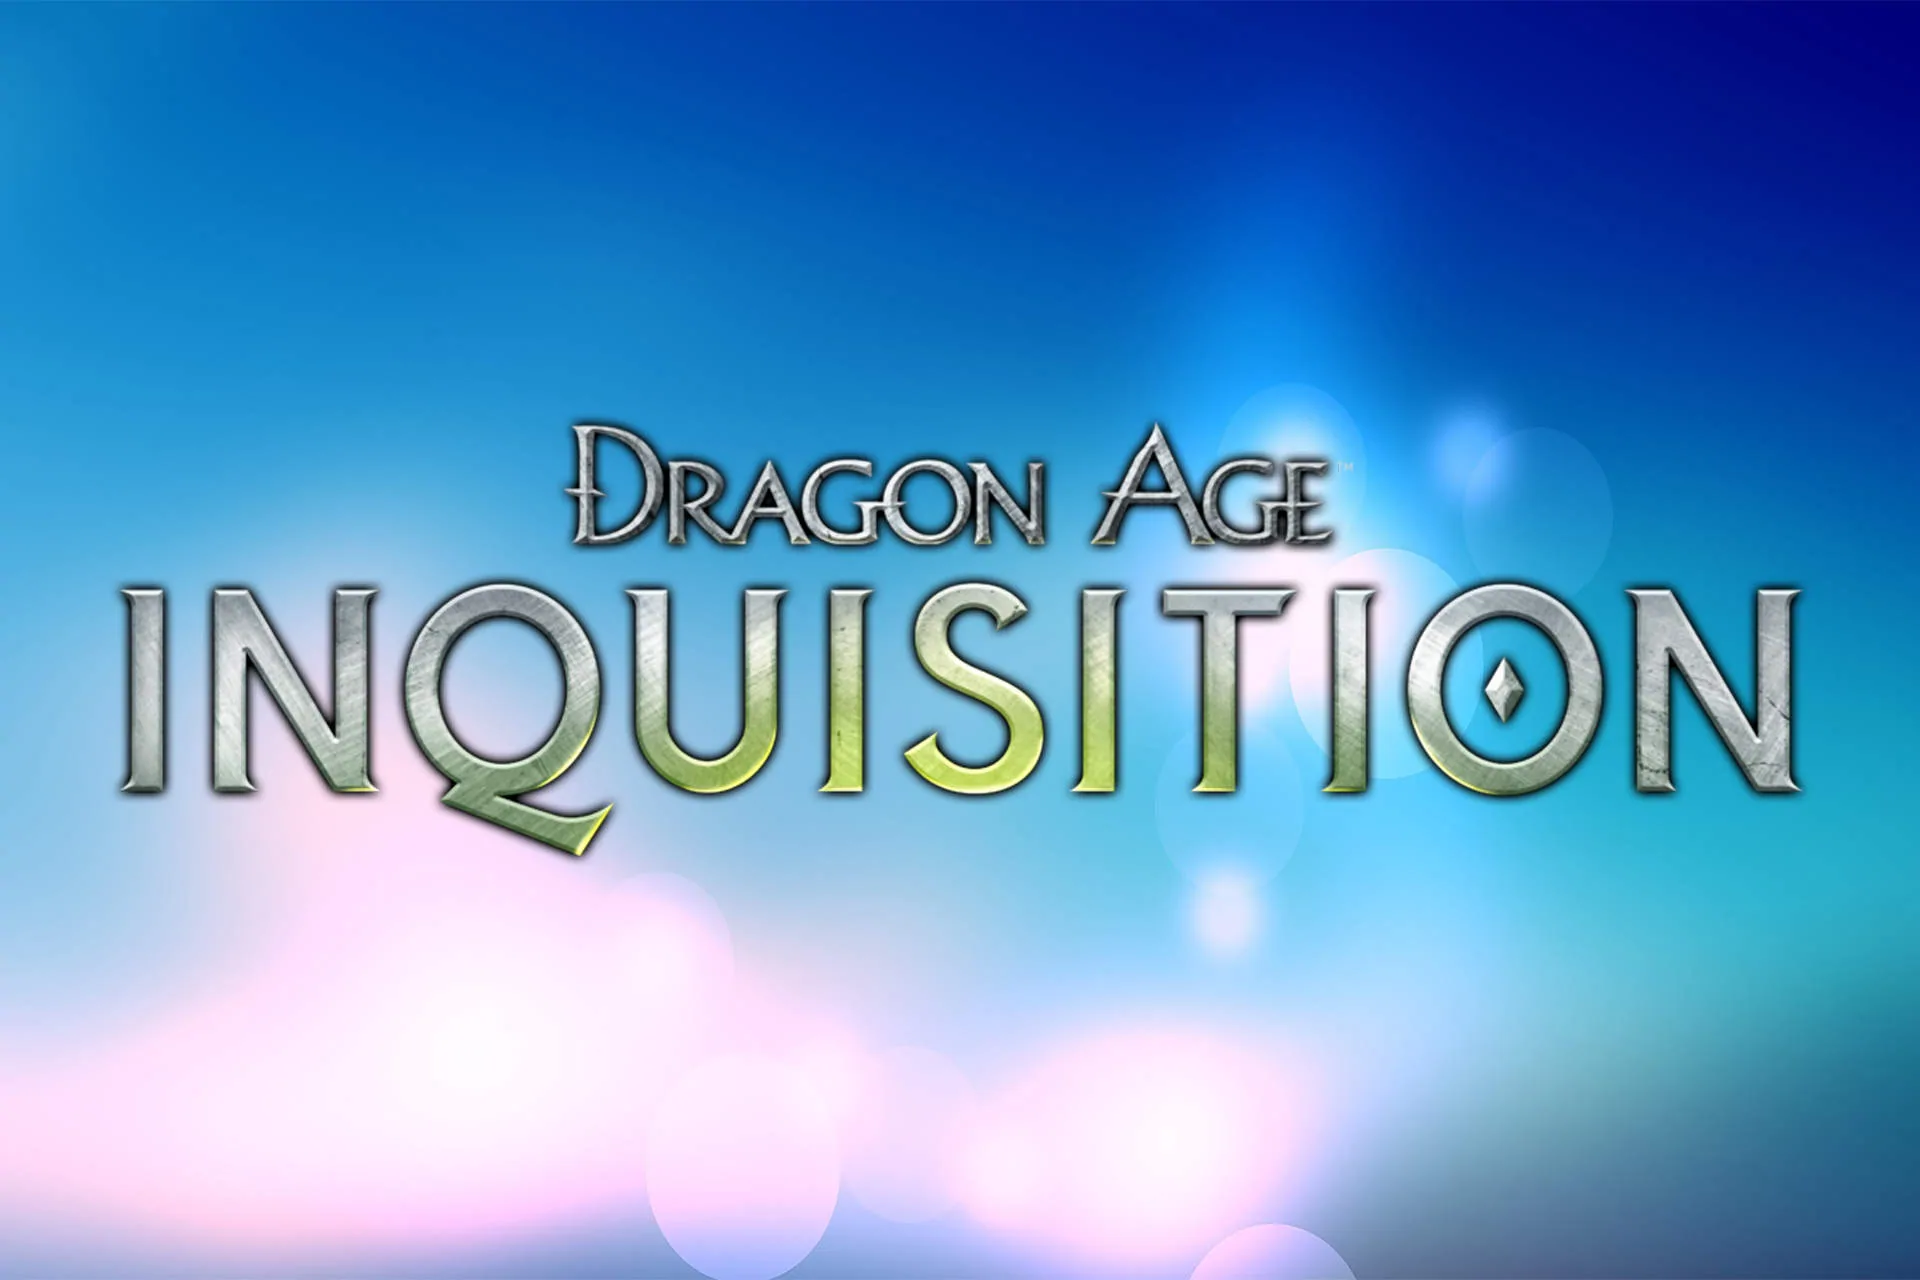 Dragon Age Inquisition gặp sự cố khi ra mắt